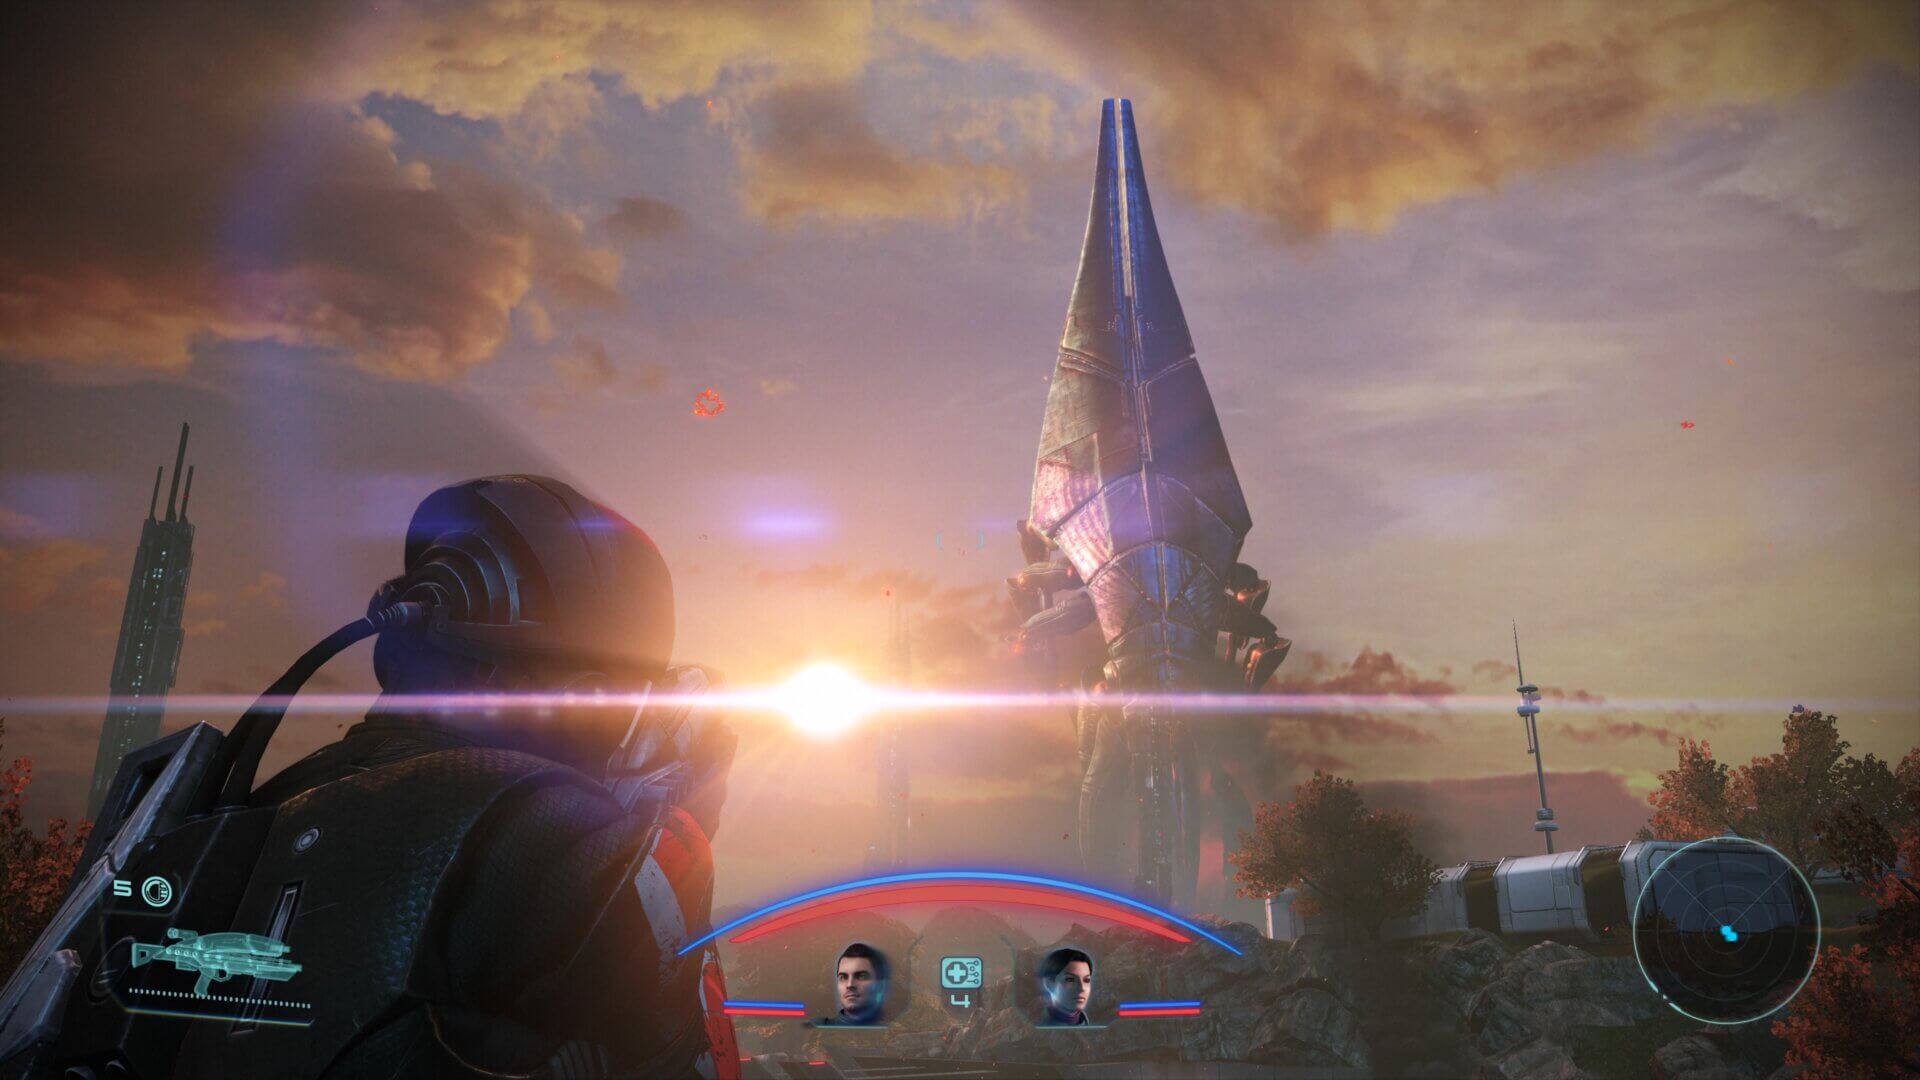 Game Hype - Mass Effect Legendary Edition